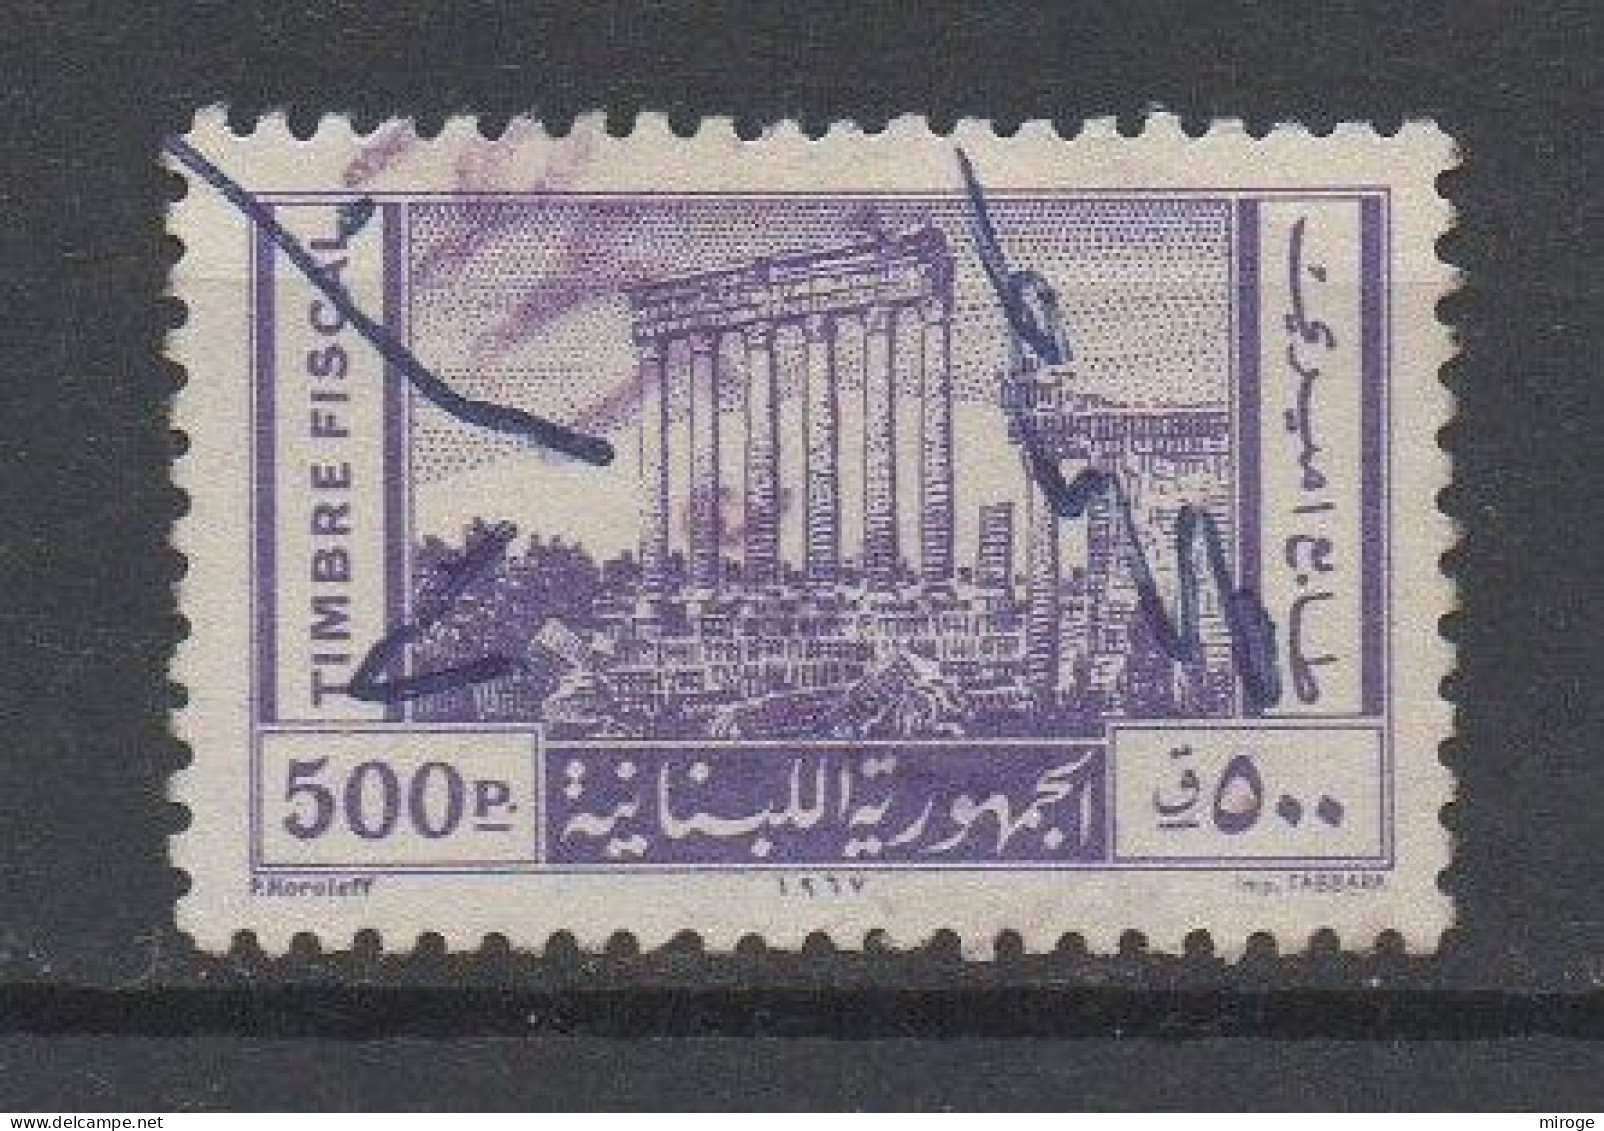 Lebanon Baalbeck Ruins 1967 500p Used Fiscal Stamp Liban Libano - Liban